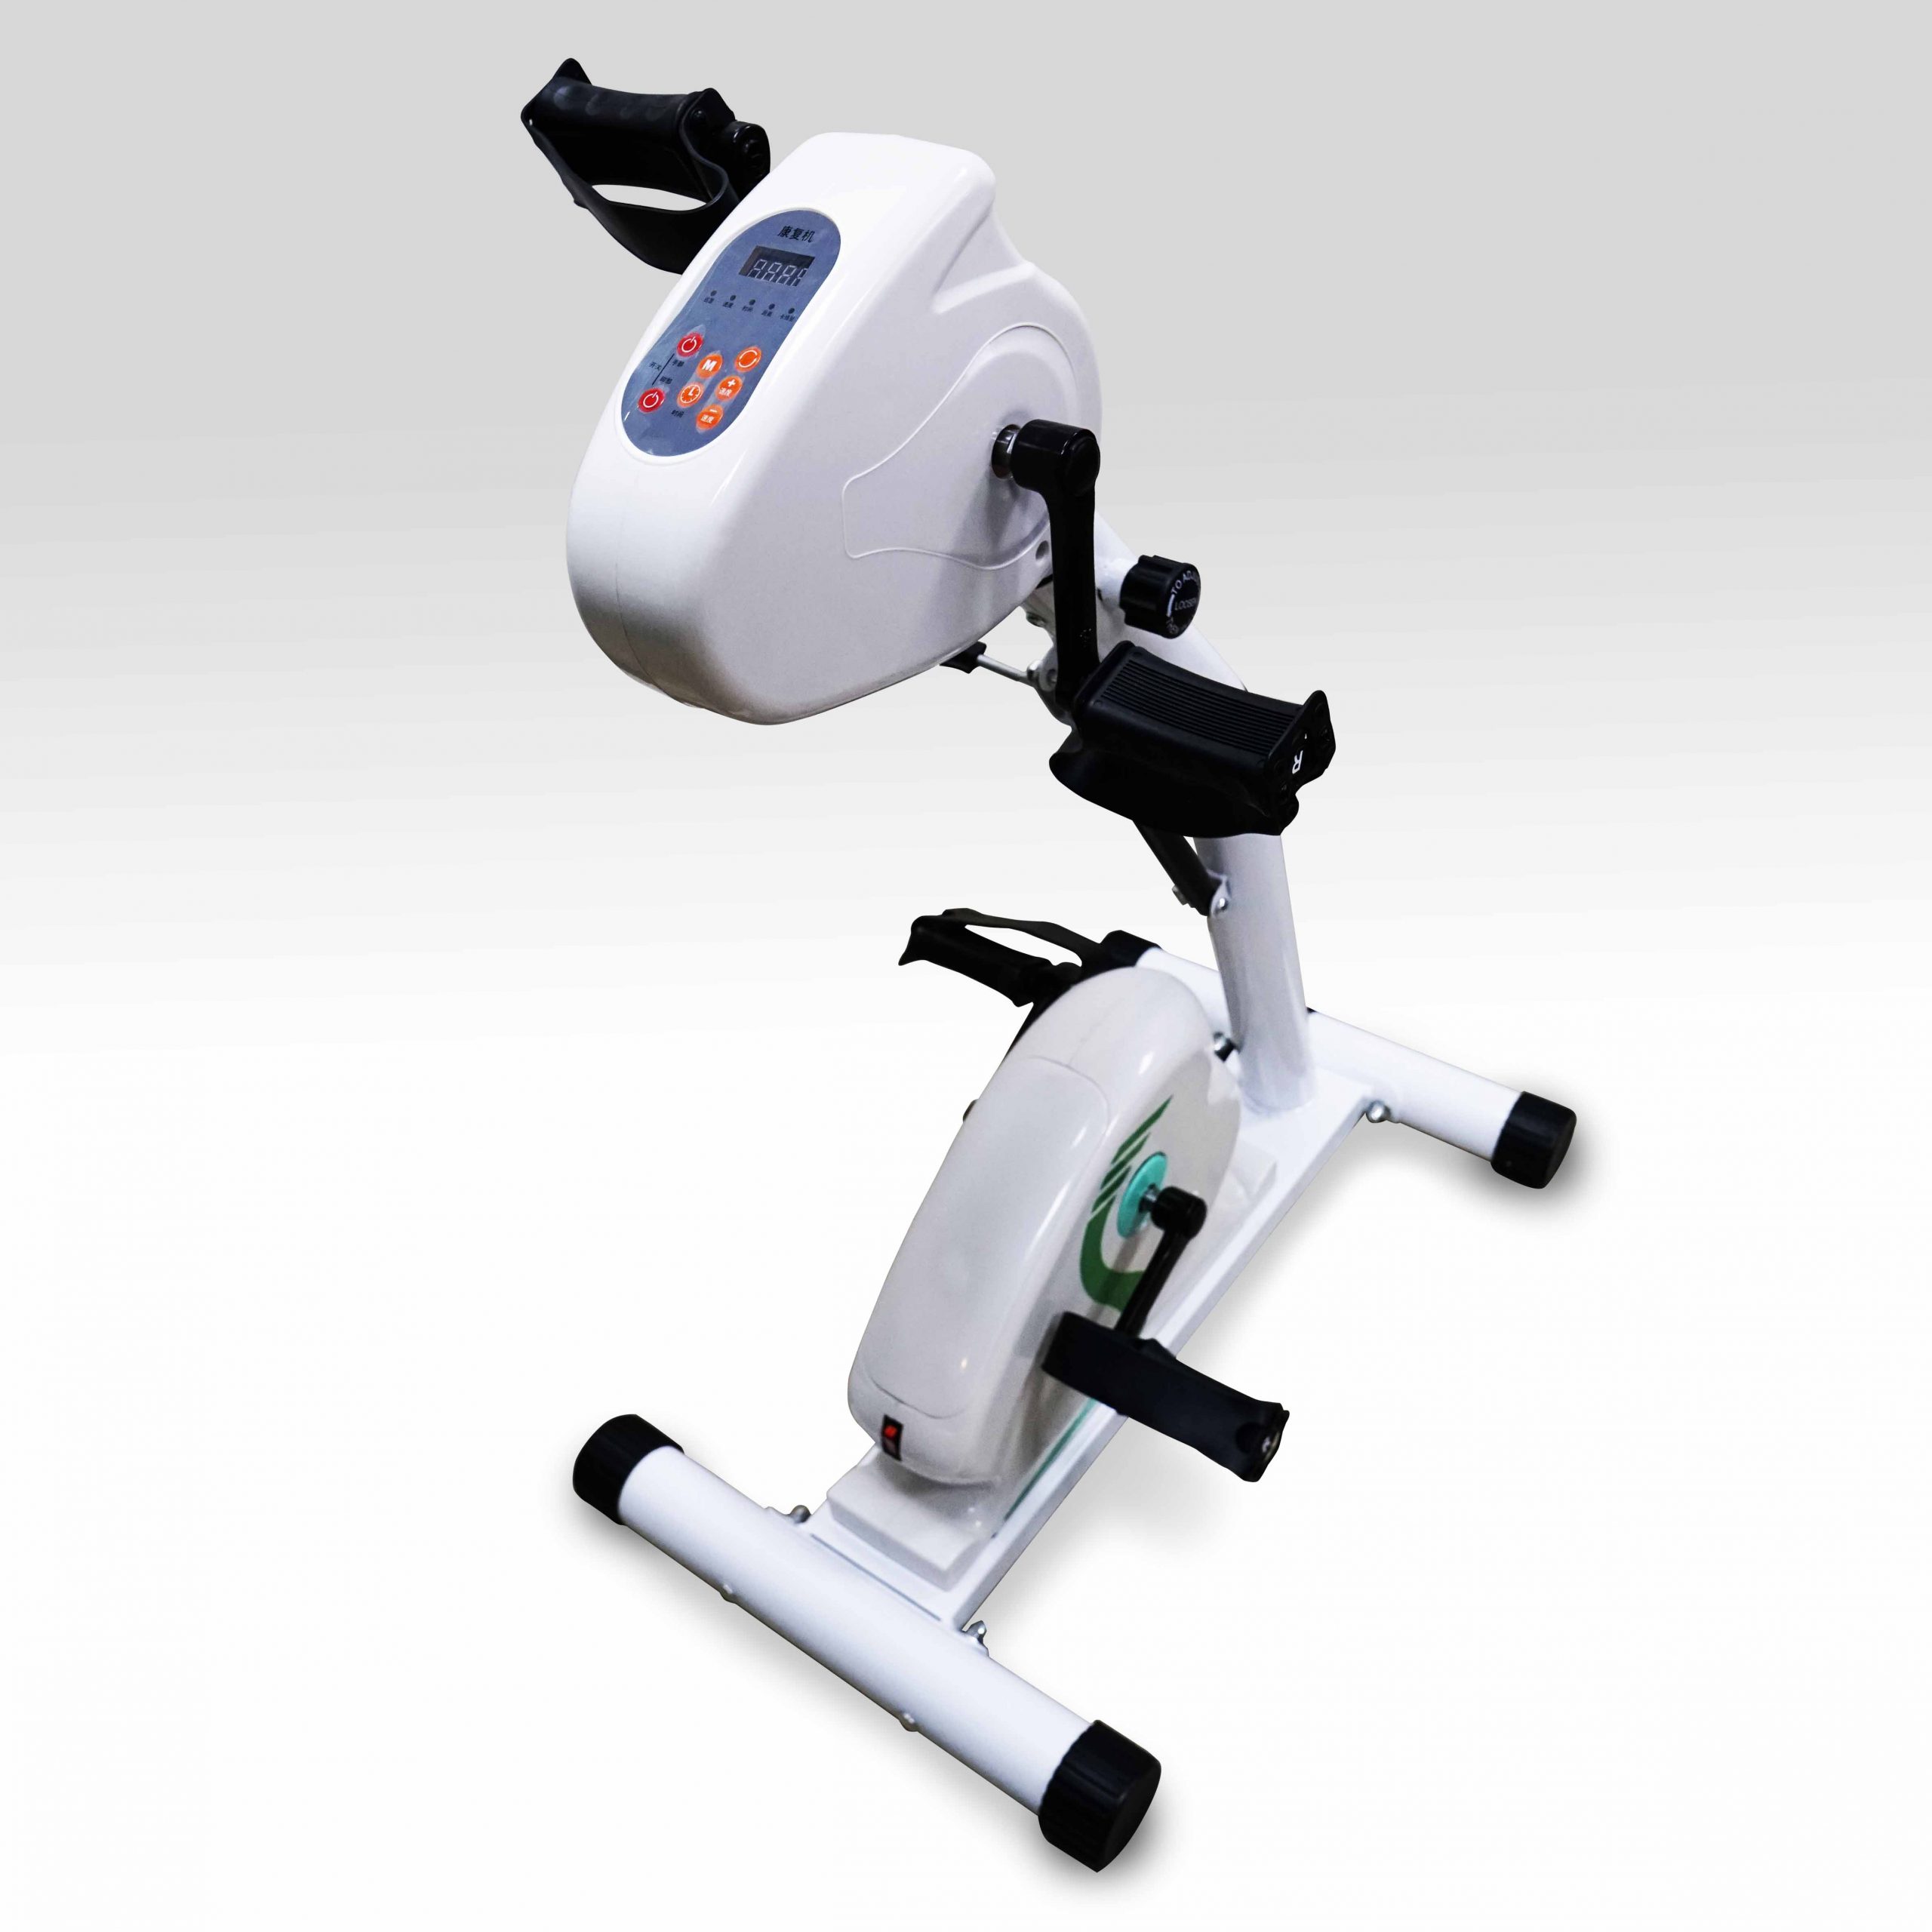 Pedal Exerciser Electric Bike for Arms  Legs Motors HB-01C Abu  Lail Medical  Sport Center